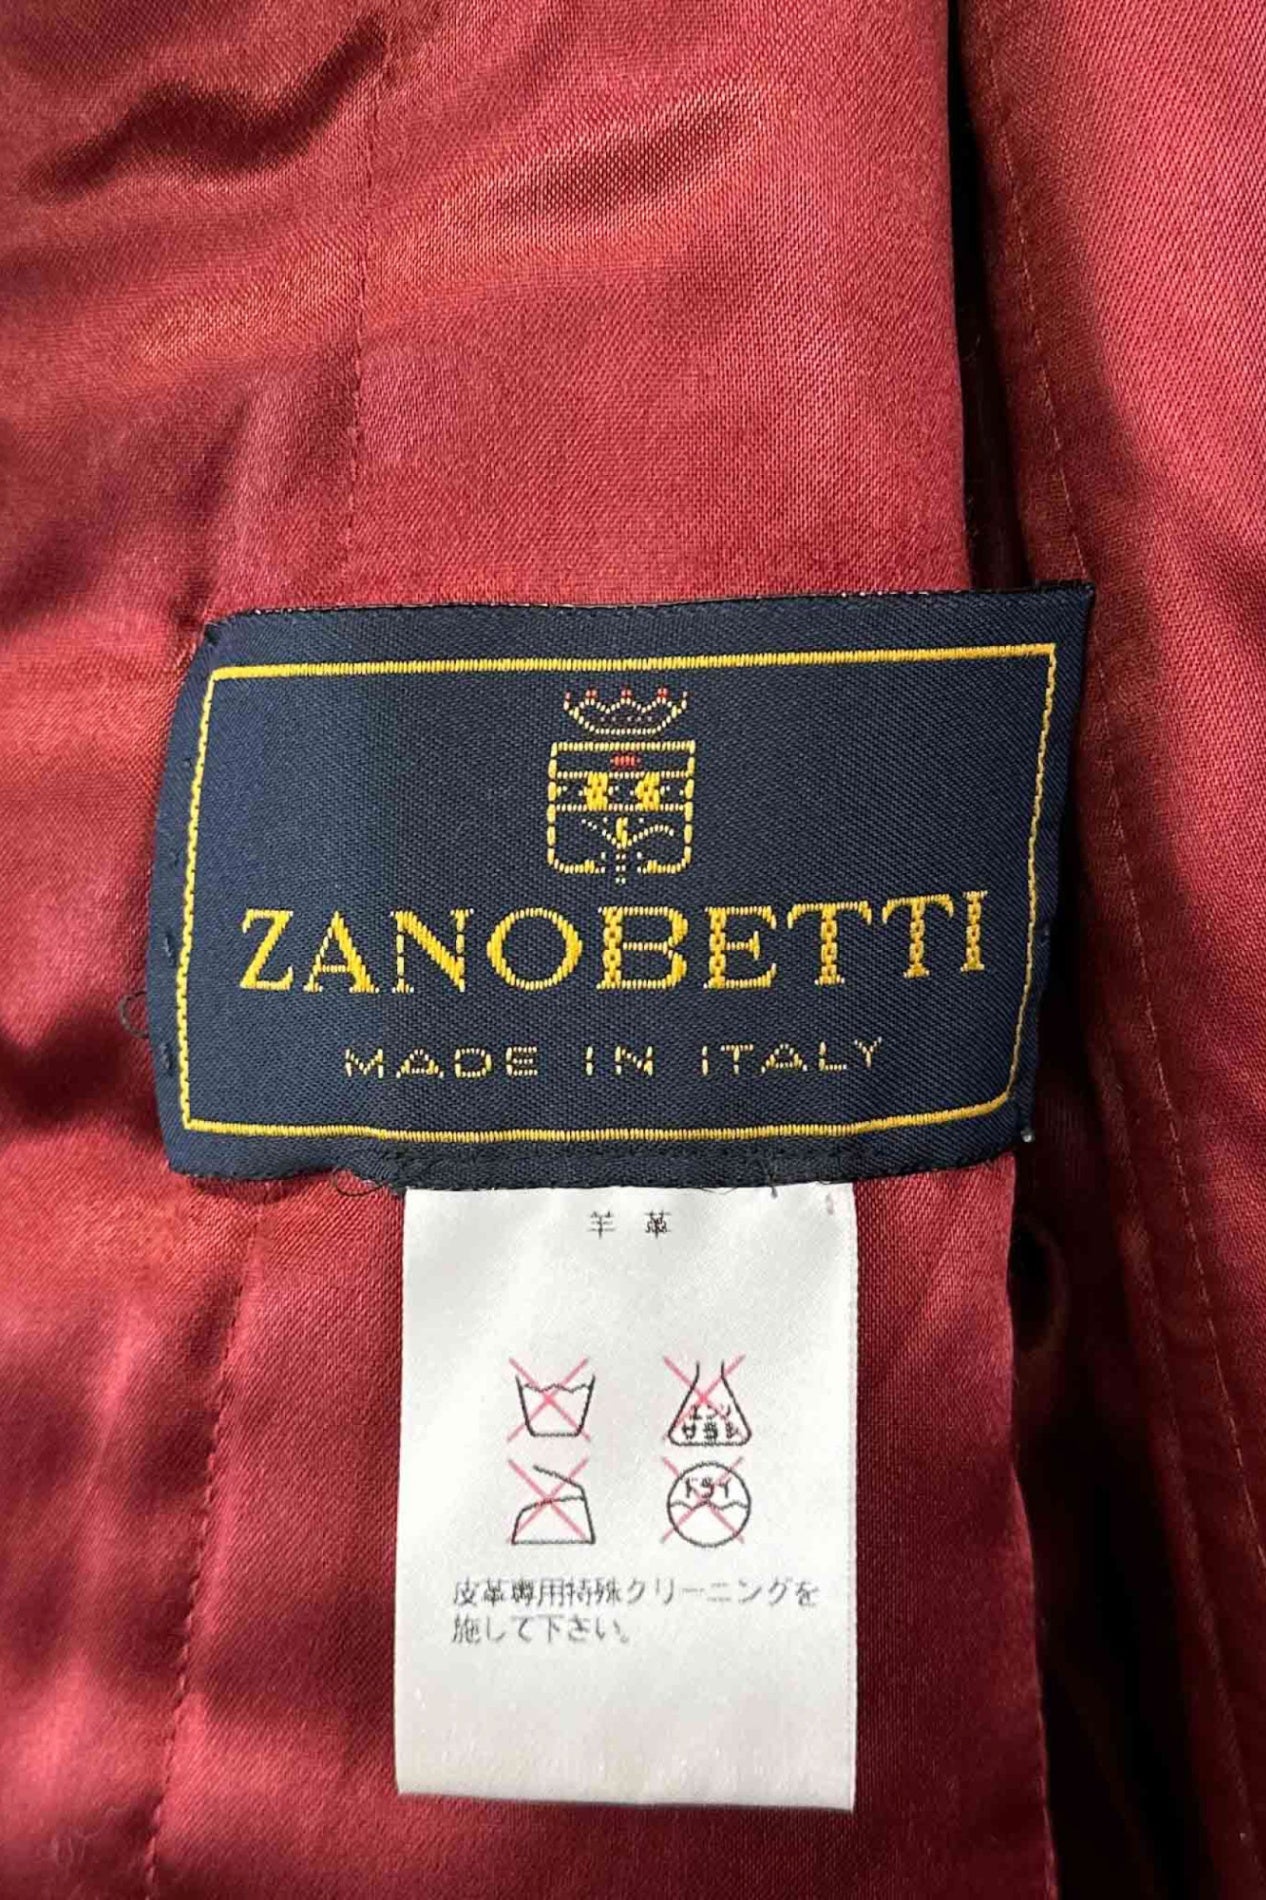 Made in Italy ZANOBETTI red leather coat